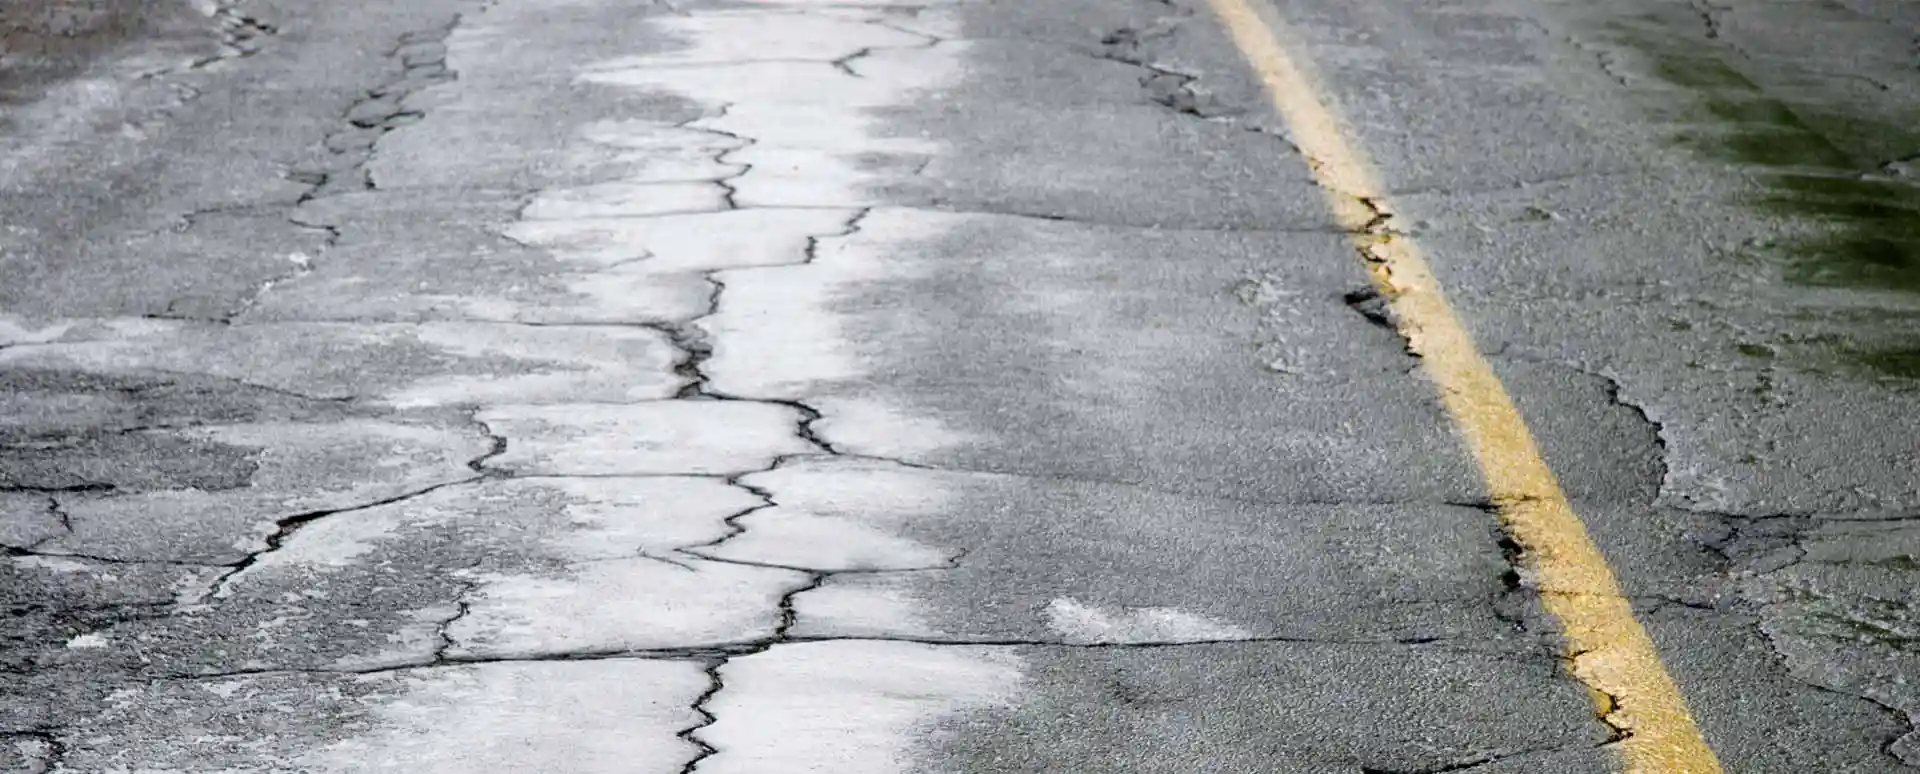 Road with cracked asphalt